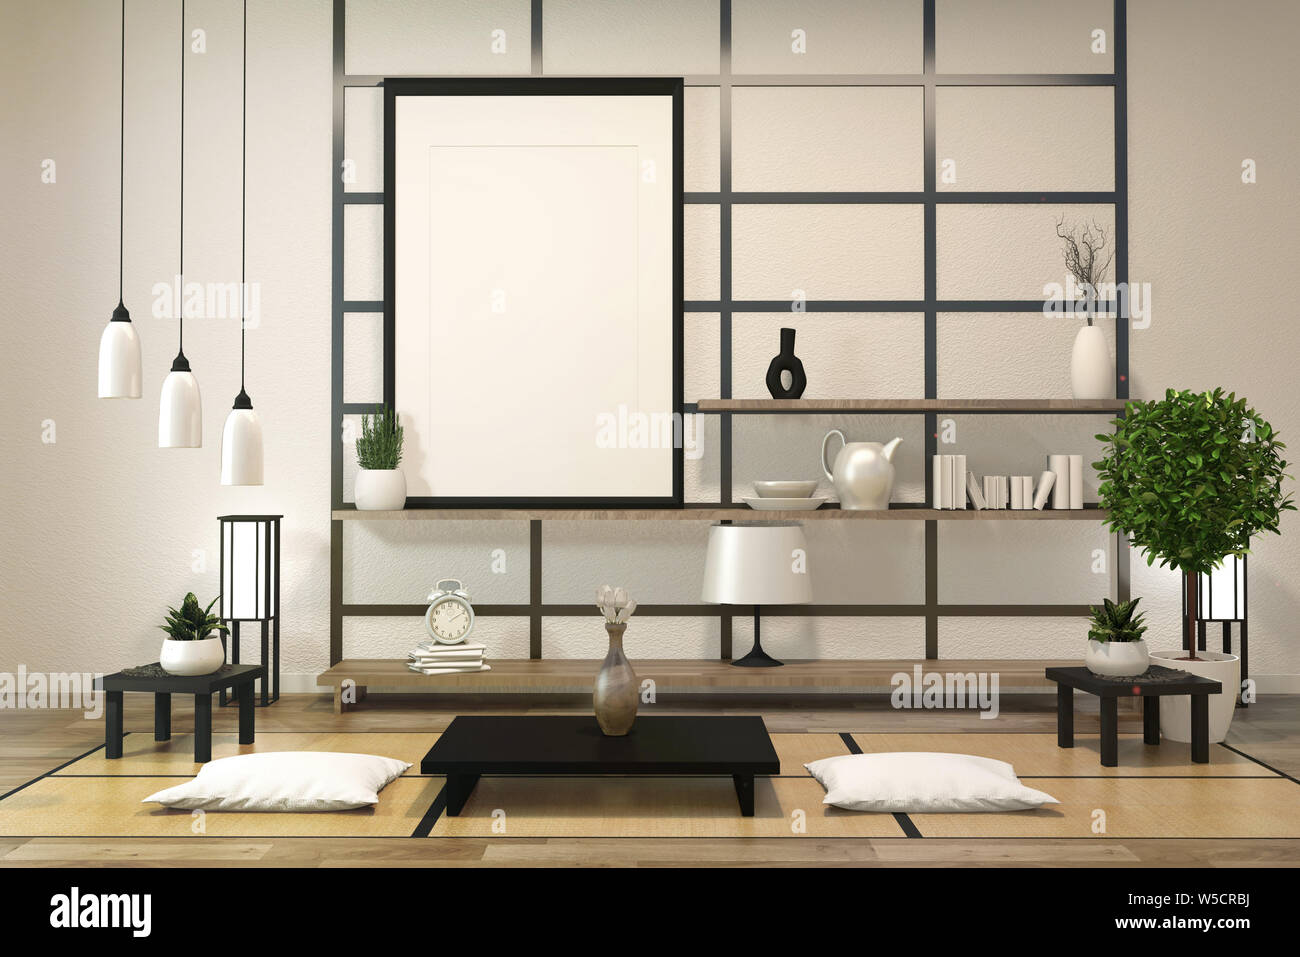 Minimalist Modern Zen Living Room With Wood Floor And Decor